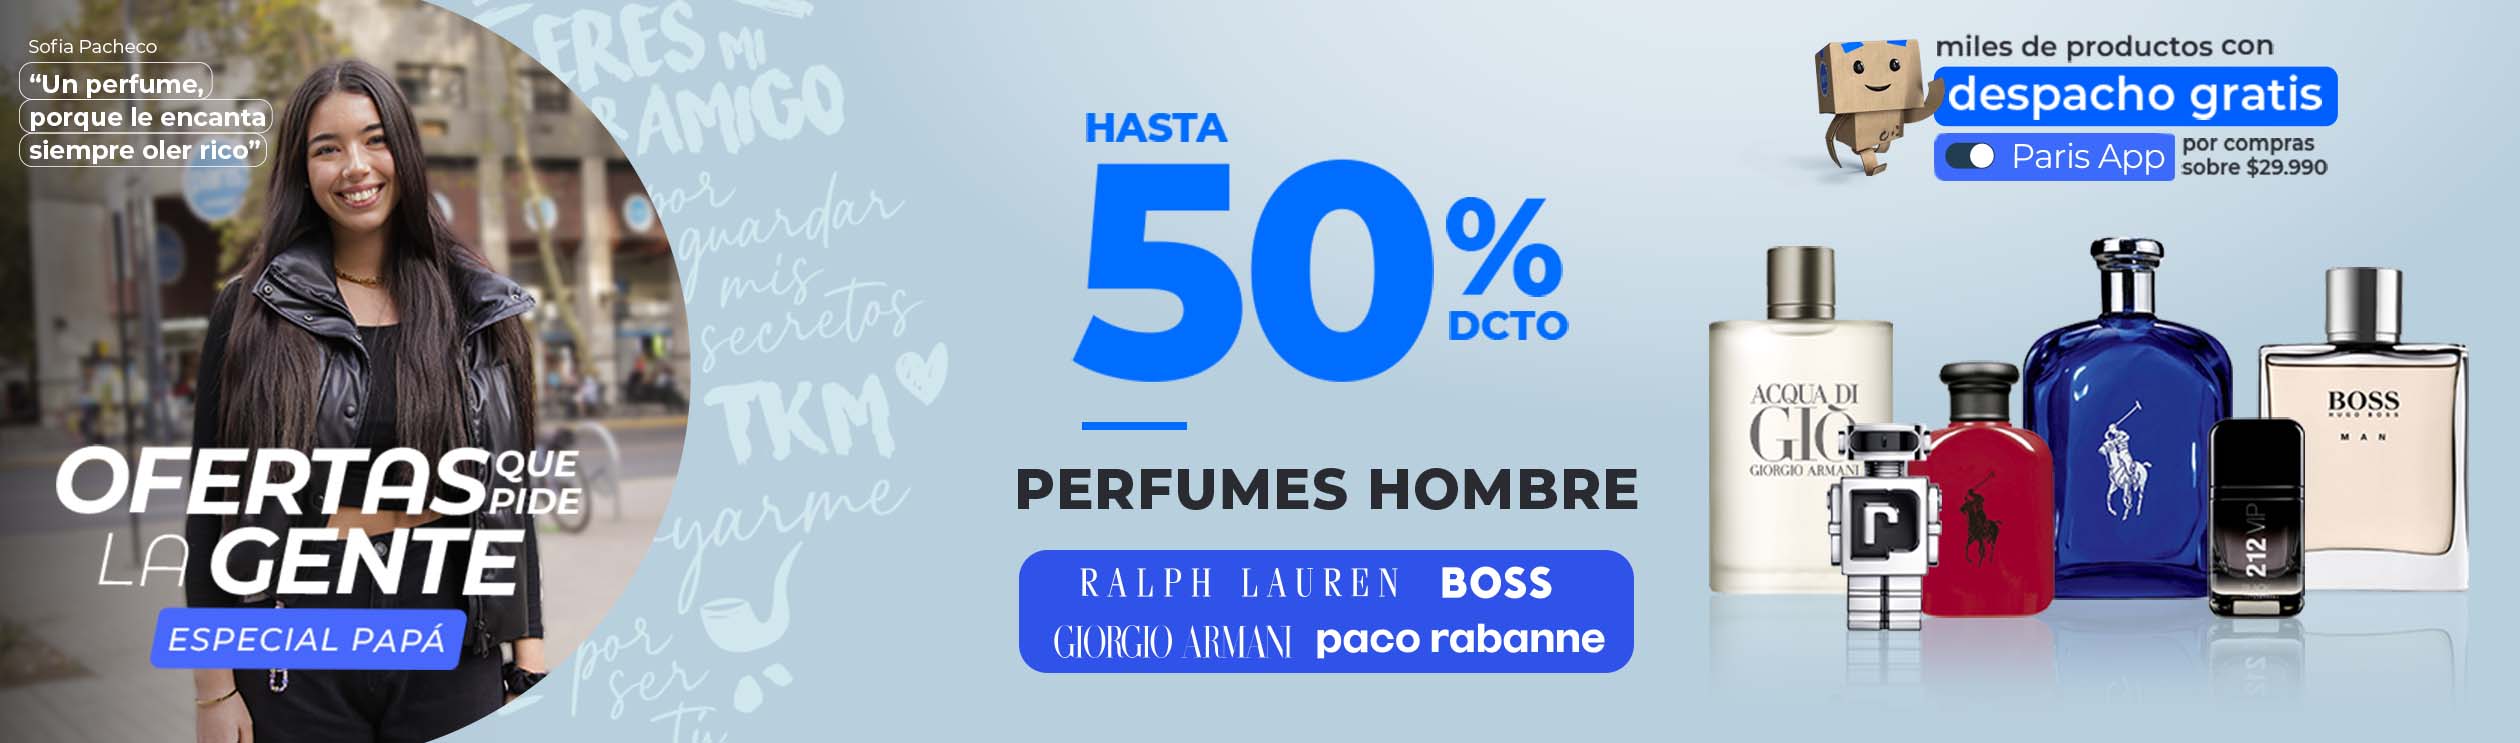 Ofertas de Hasta 50% en Perfumes Hombre Ralph Lauren, Giorgio Armani, Hugo Boss, Paco Rabanne